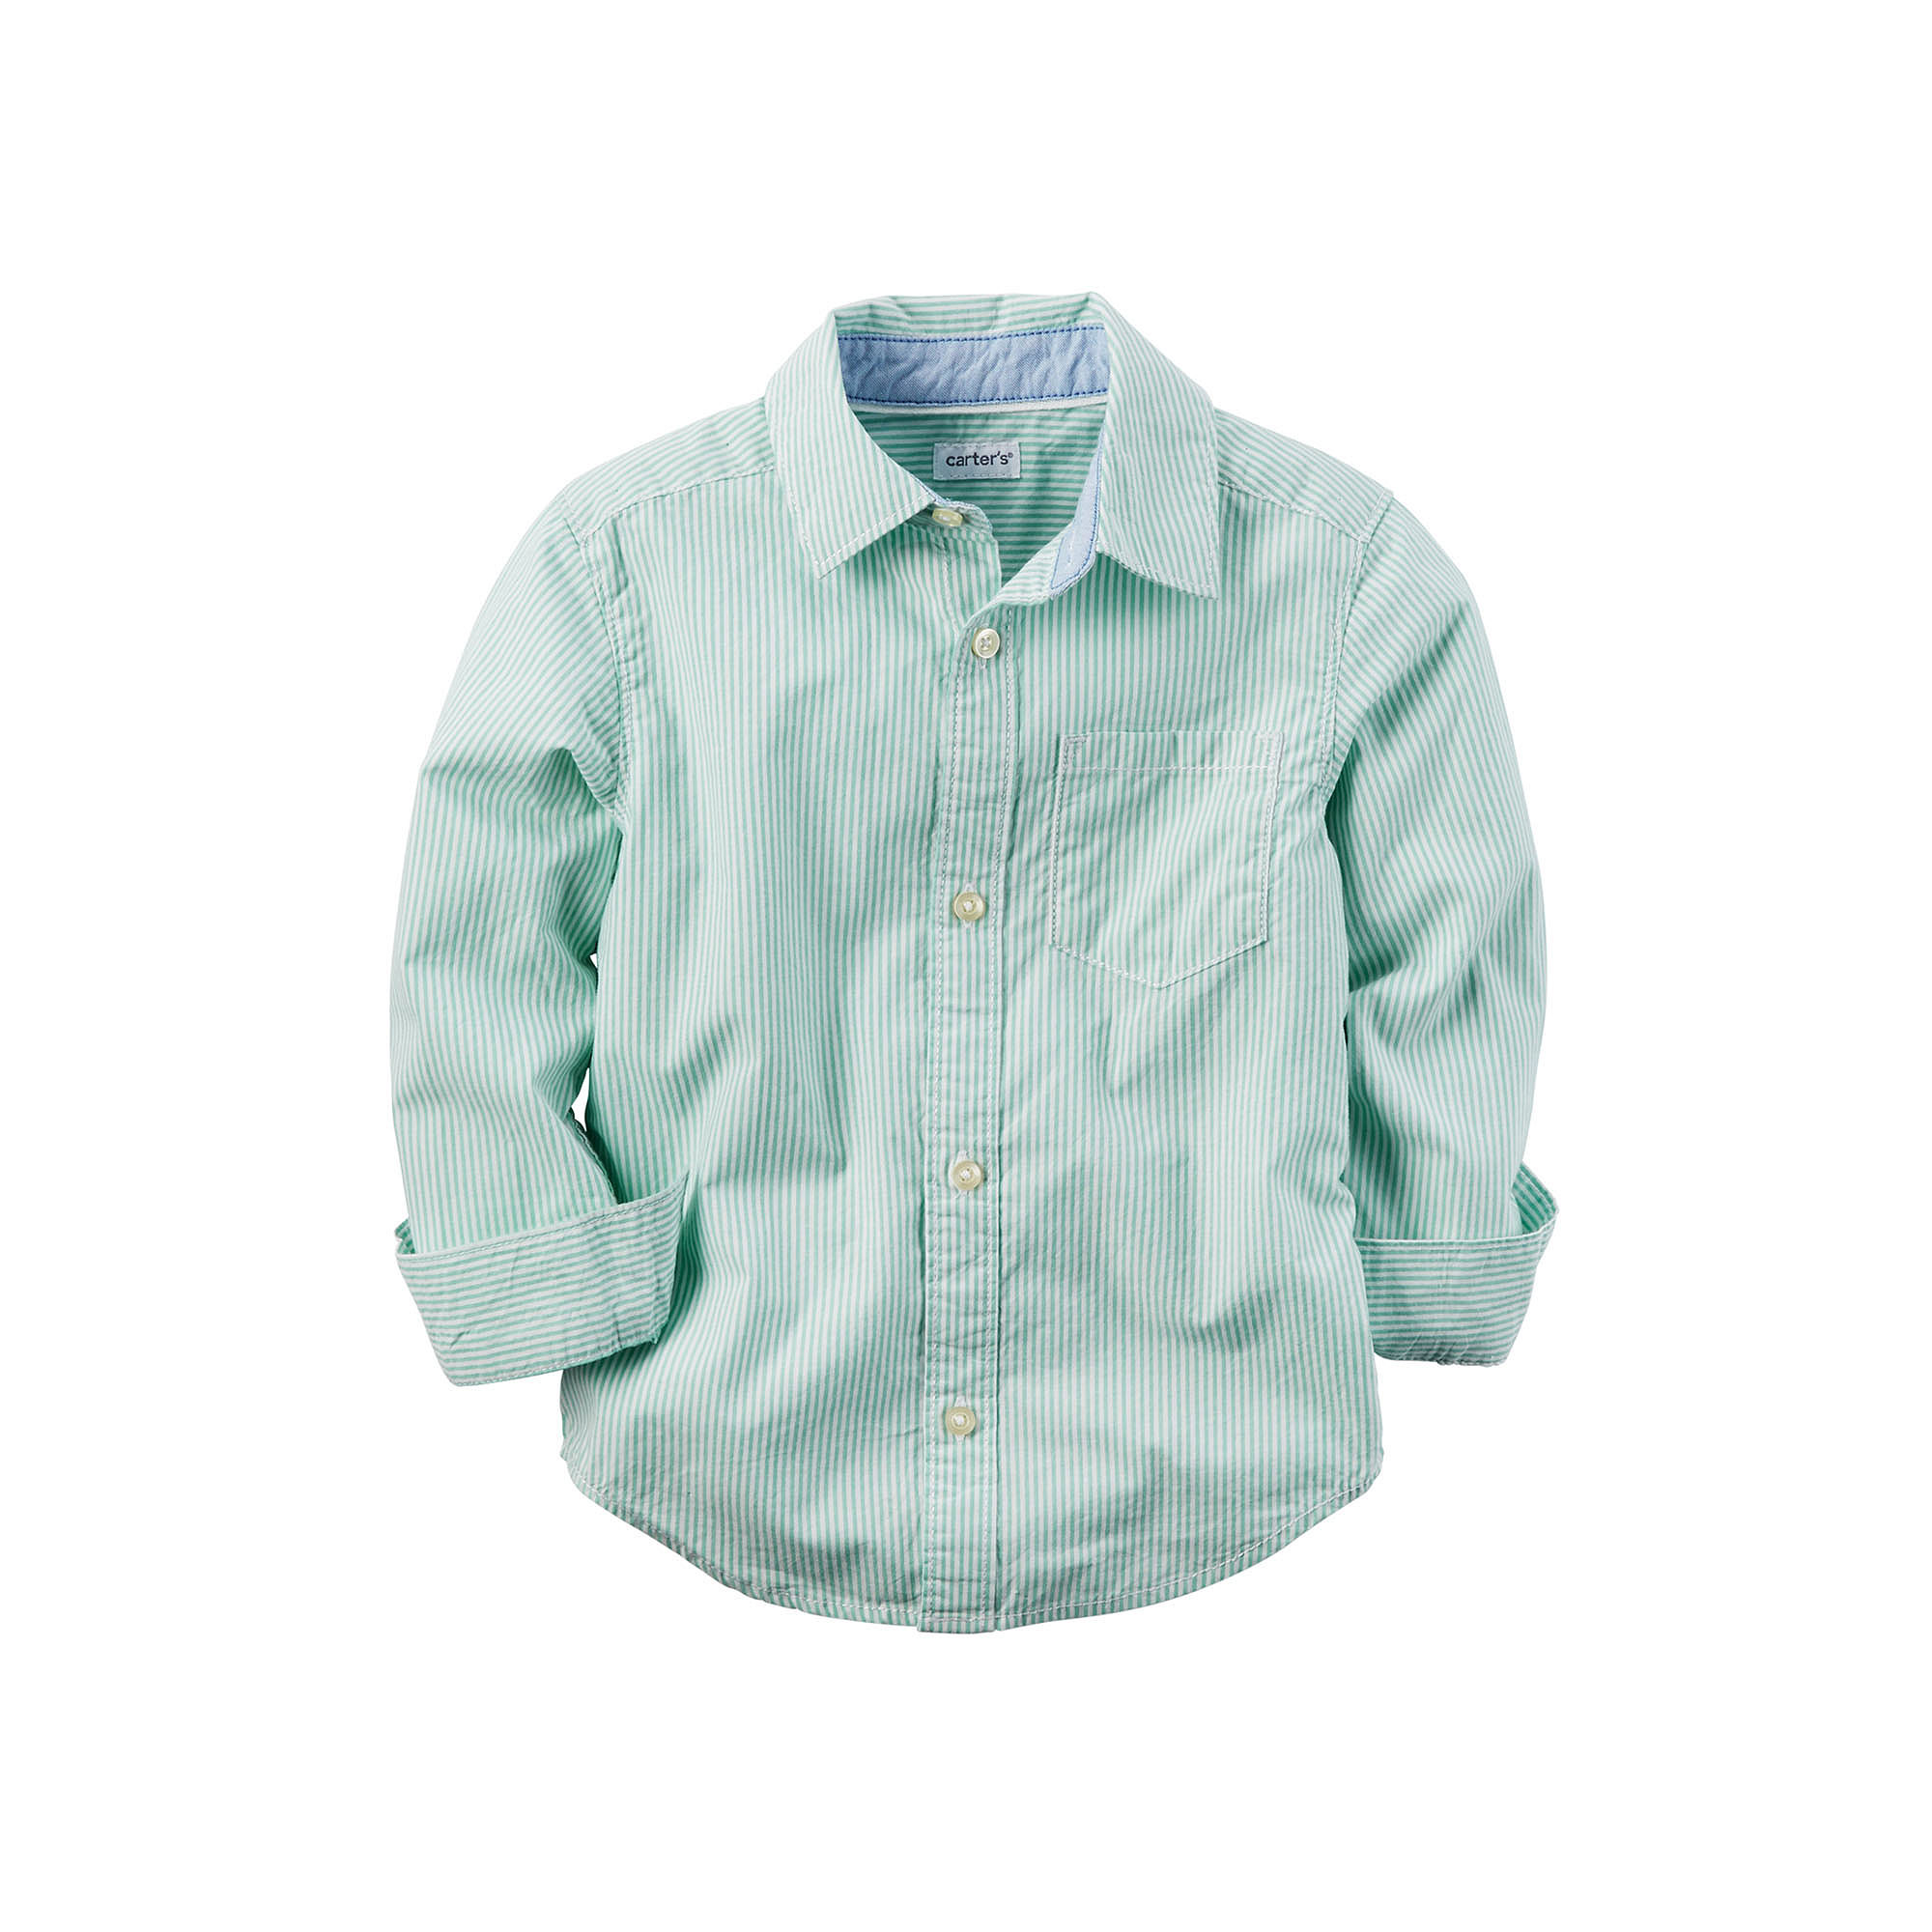 Carter's Long-Sleeve Cotton Shirt - Preschool Boys 4-7